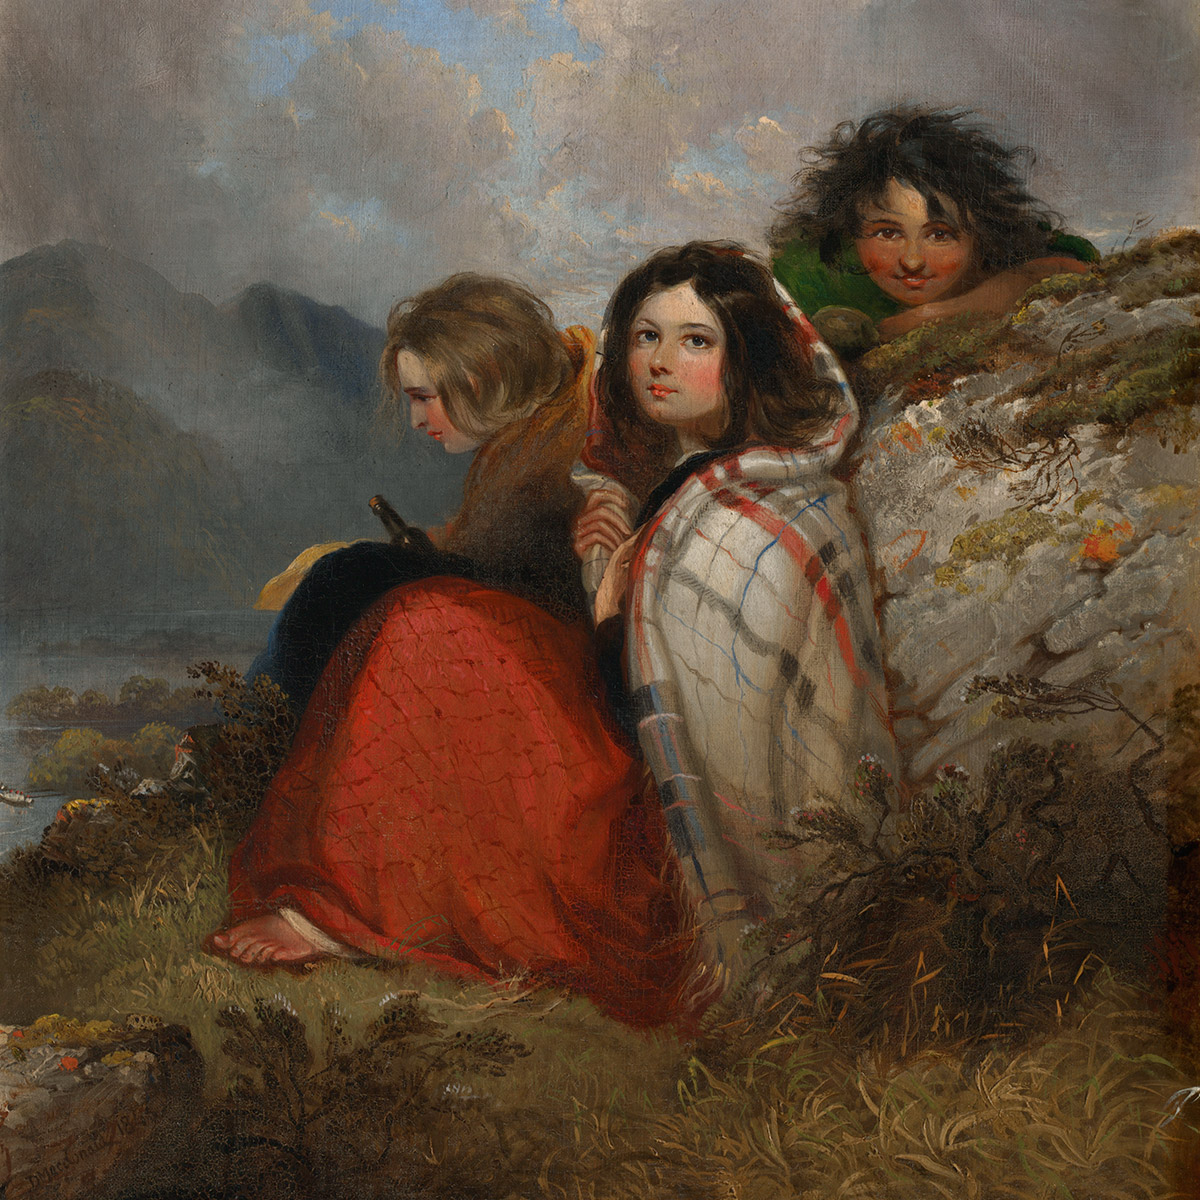 A painting entitled "Irish Peasant Children" by Daniel Macdonald